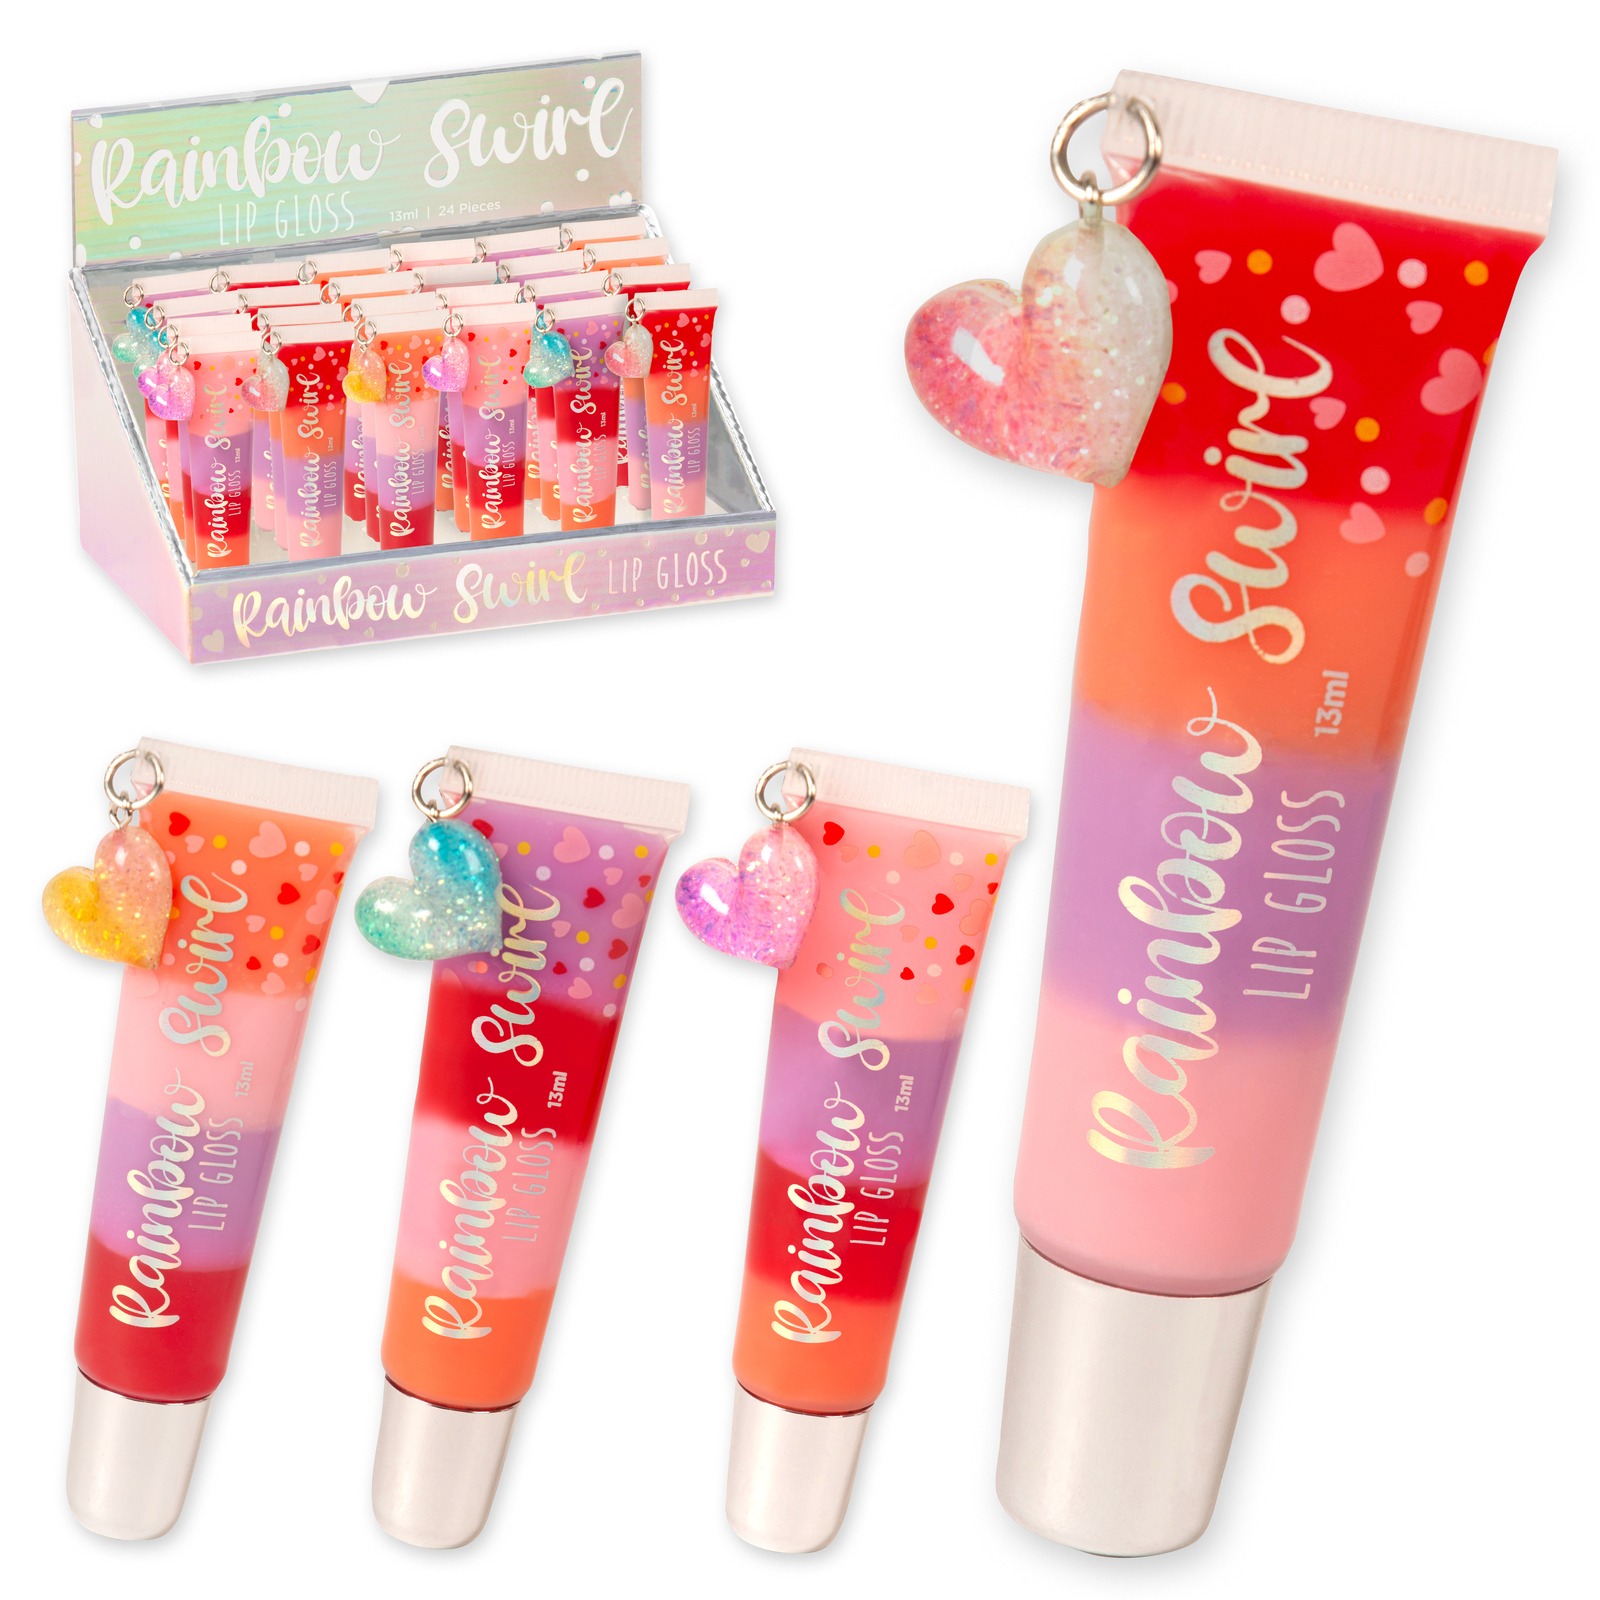 Rainbow Swirl Lip Gloss - Pack of 24 ($3.10 ea)